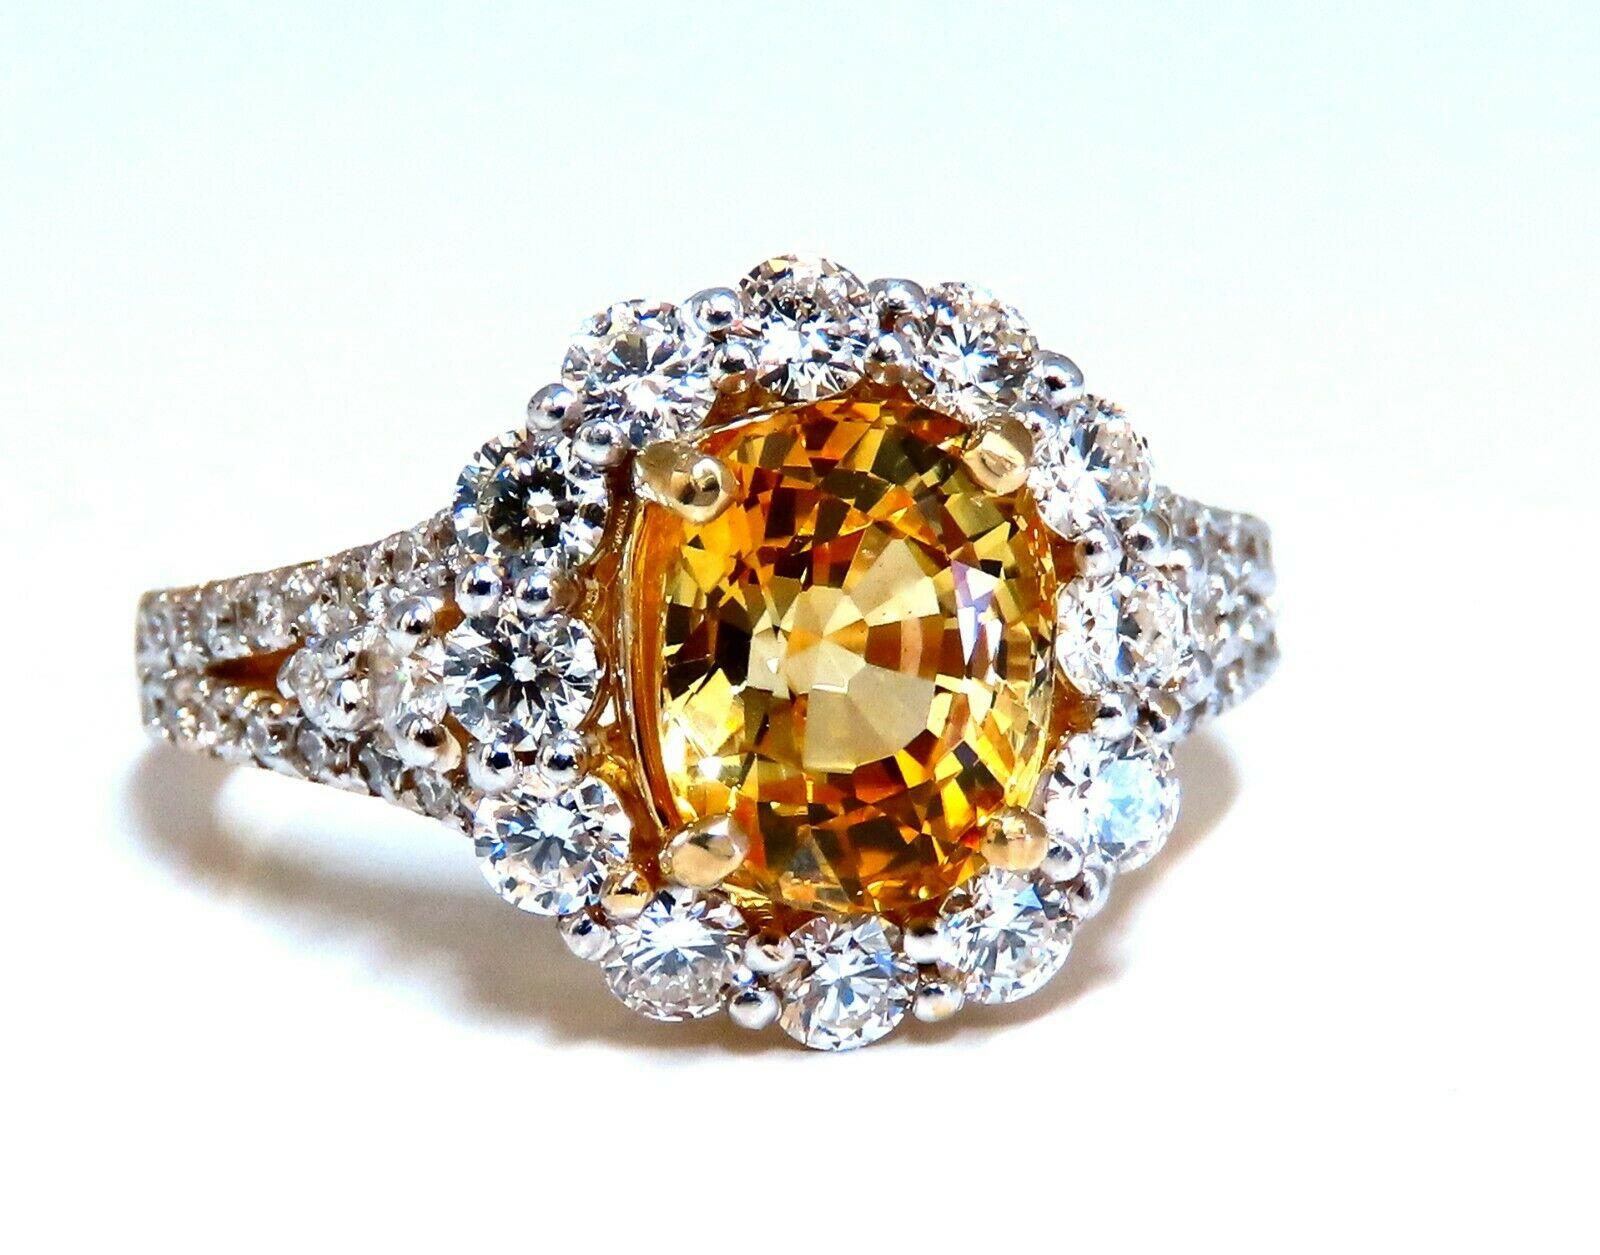 Yellow Orange Classic Halo Sapphire ring.

2.59ct. Natural GIA Certified  Yellow Sapphire Ring

GIA Certified Report ID: 2358608440

8.27 X 6.56 X 5.32mm

Full cut oval brilliant 

Clean Clarity & Transparent



1.70ct. Diamonds.

Round & full cuts